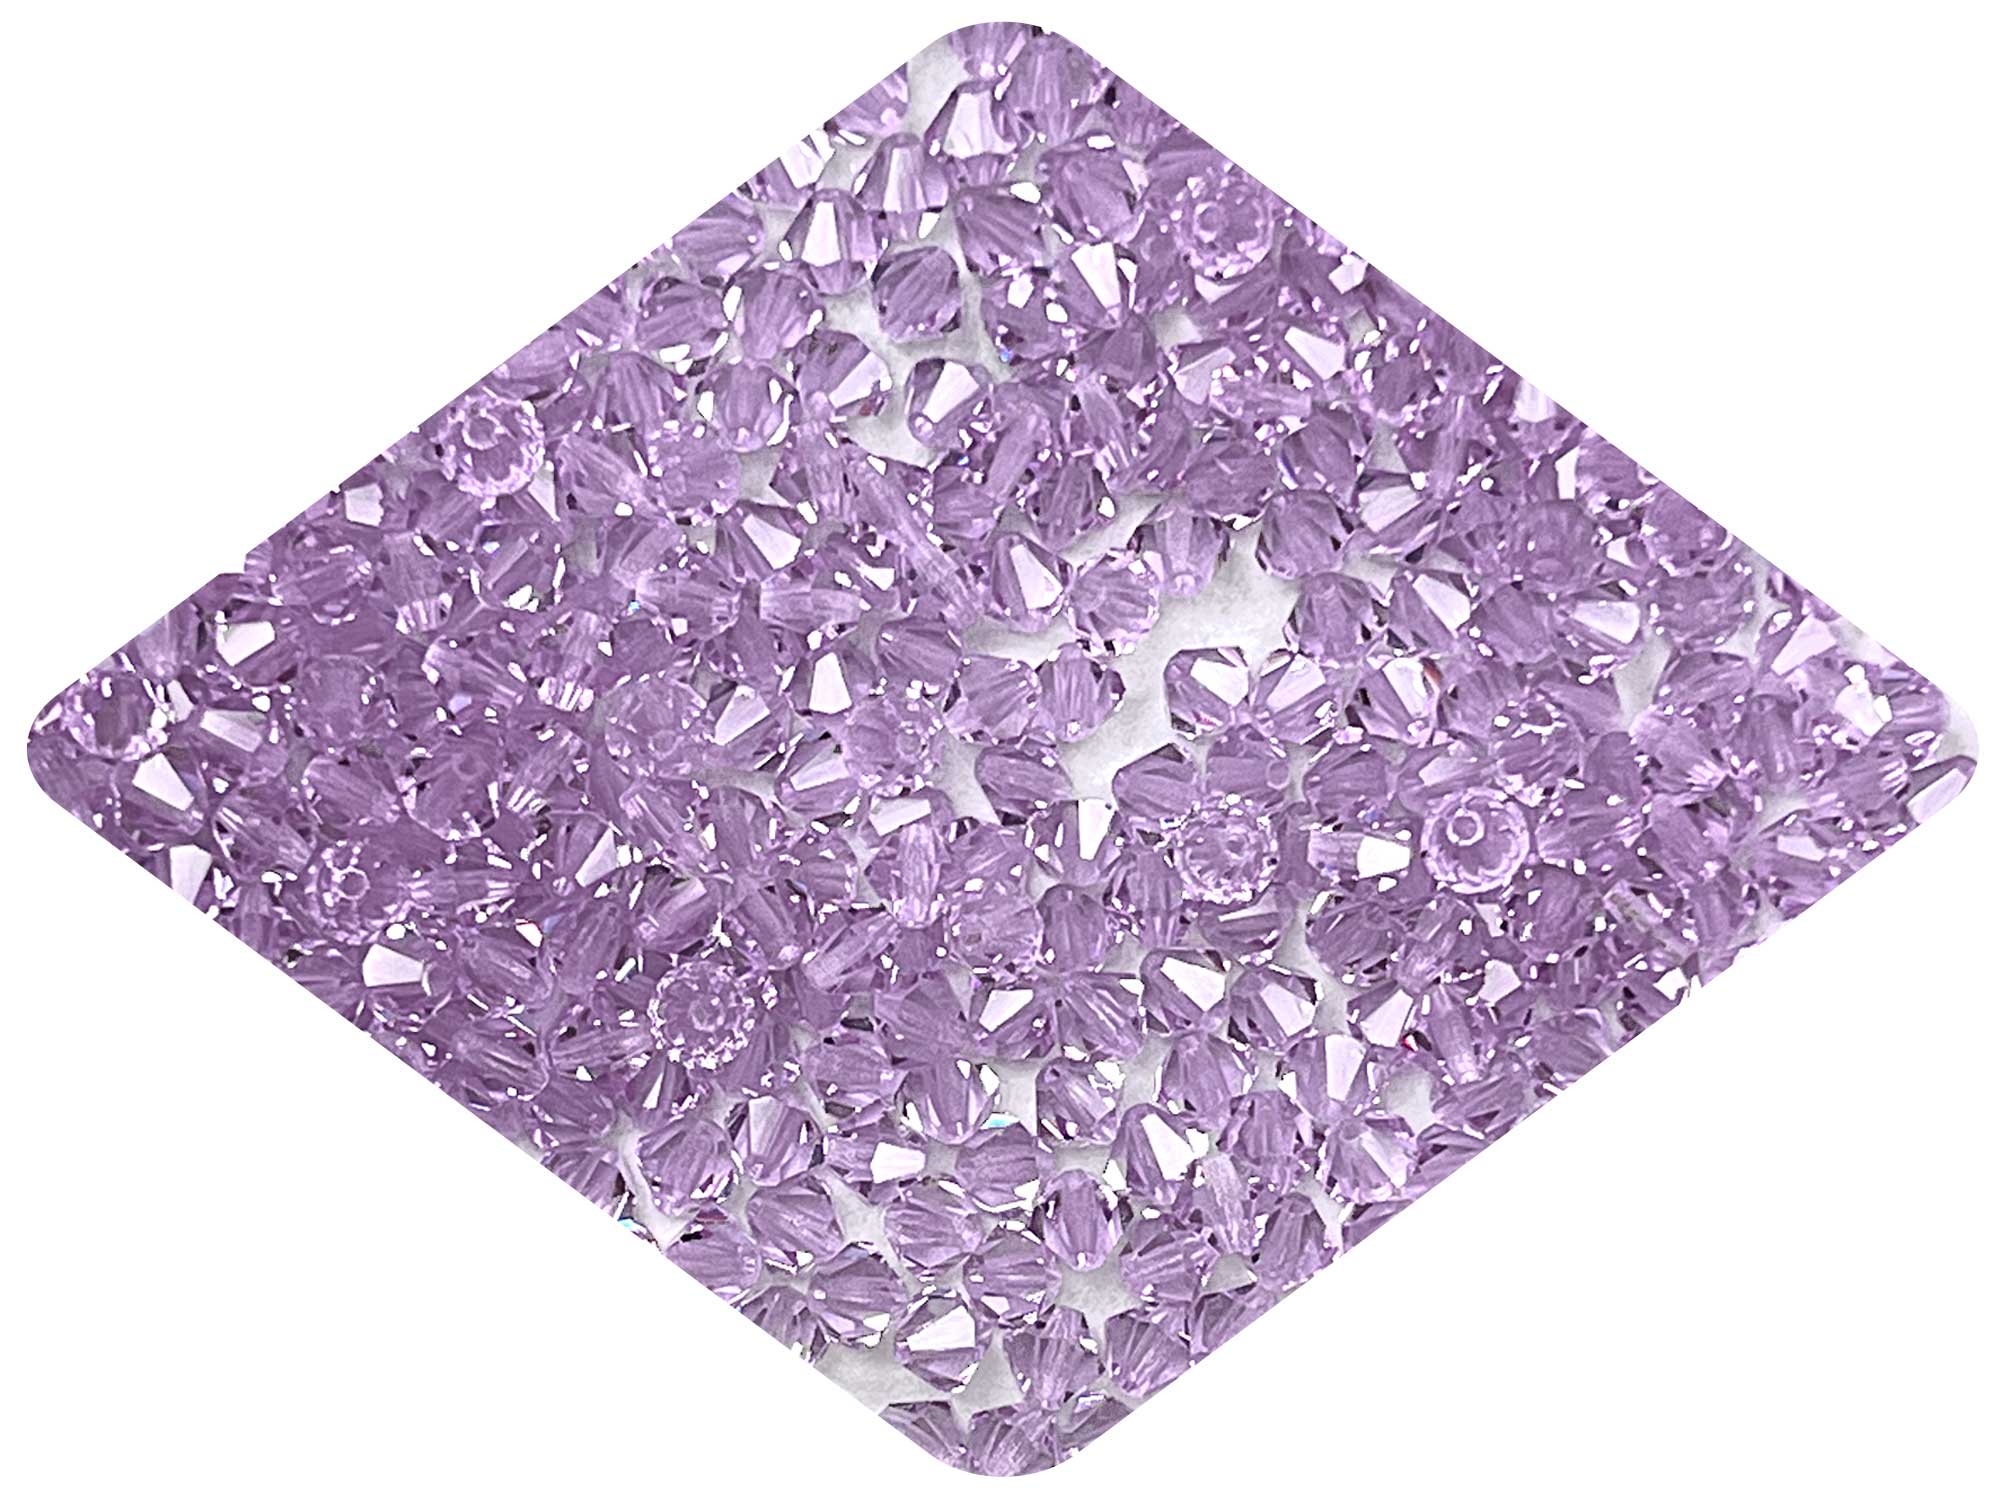 Violet Czech Glass Beads Machine Cut Bicones (MC Rondell, Diamond Shape) transparent rich purple crystals